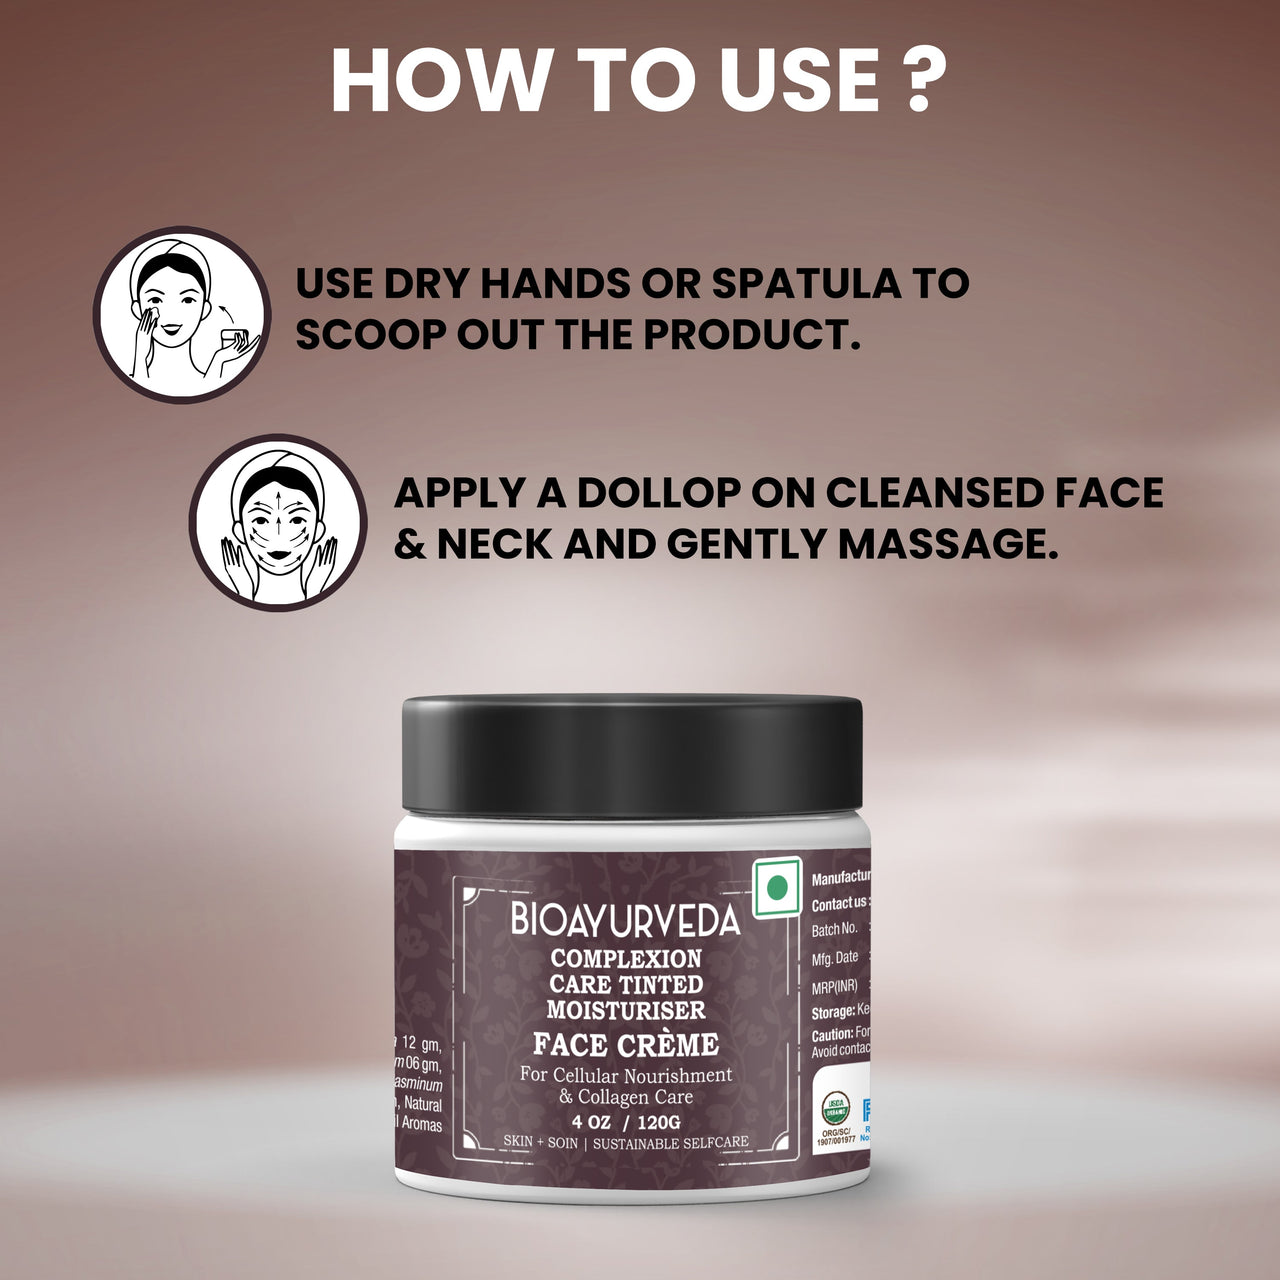 How to use Moisturiser Face Cream